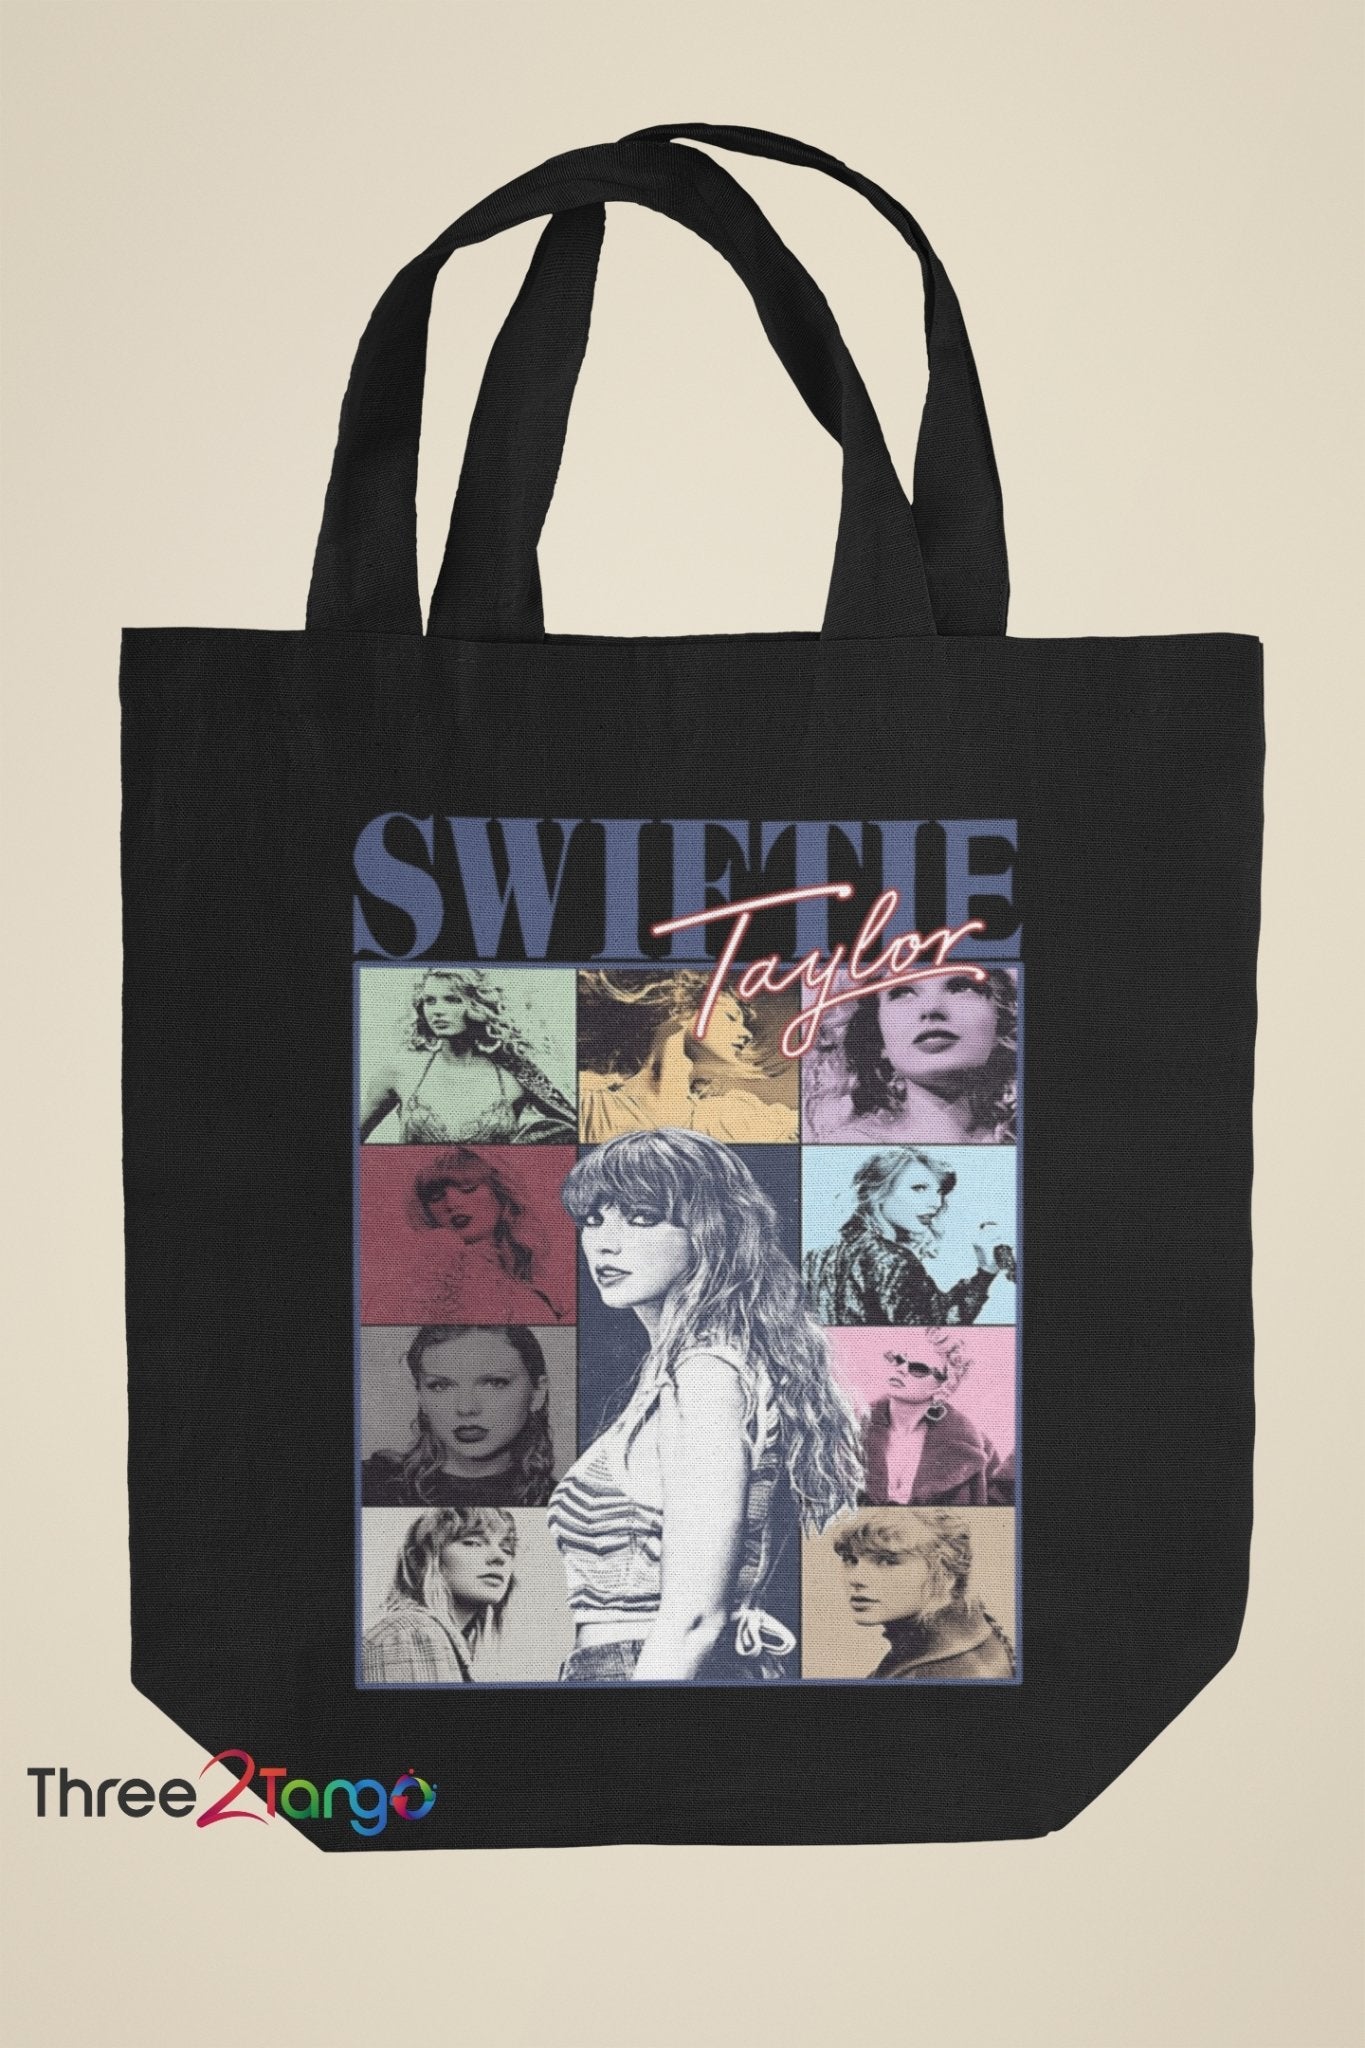 Taylor Swift Concert Tote Bag - The Swiftie – Three2Tango Tee's